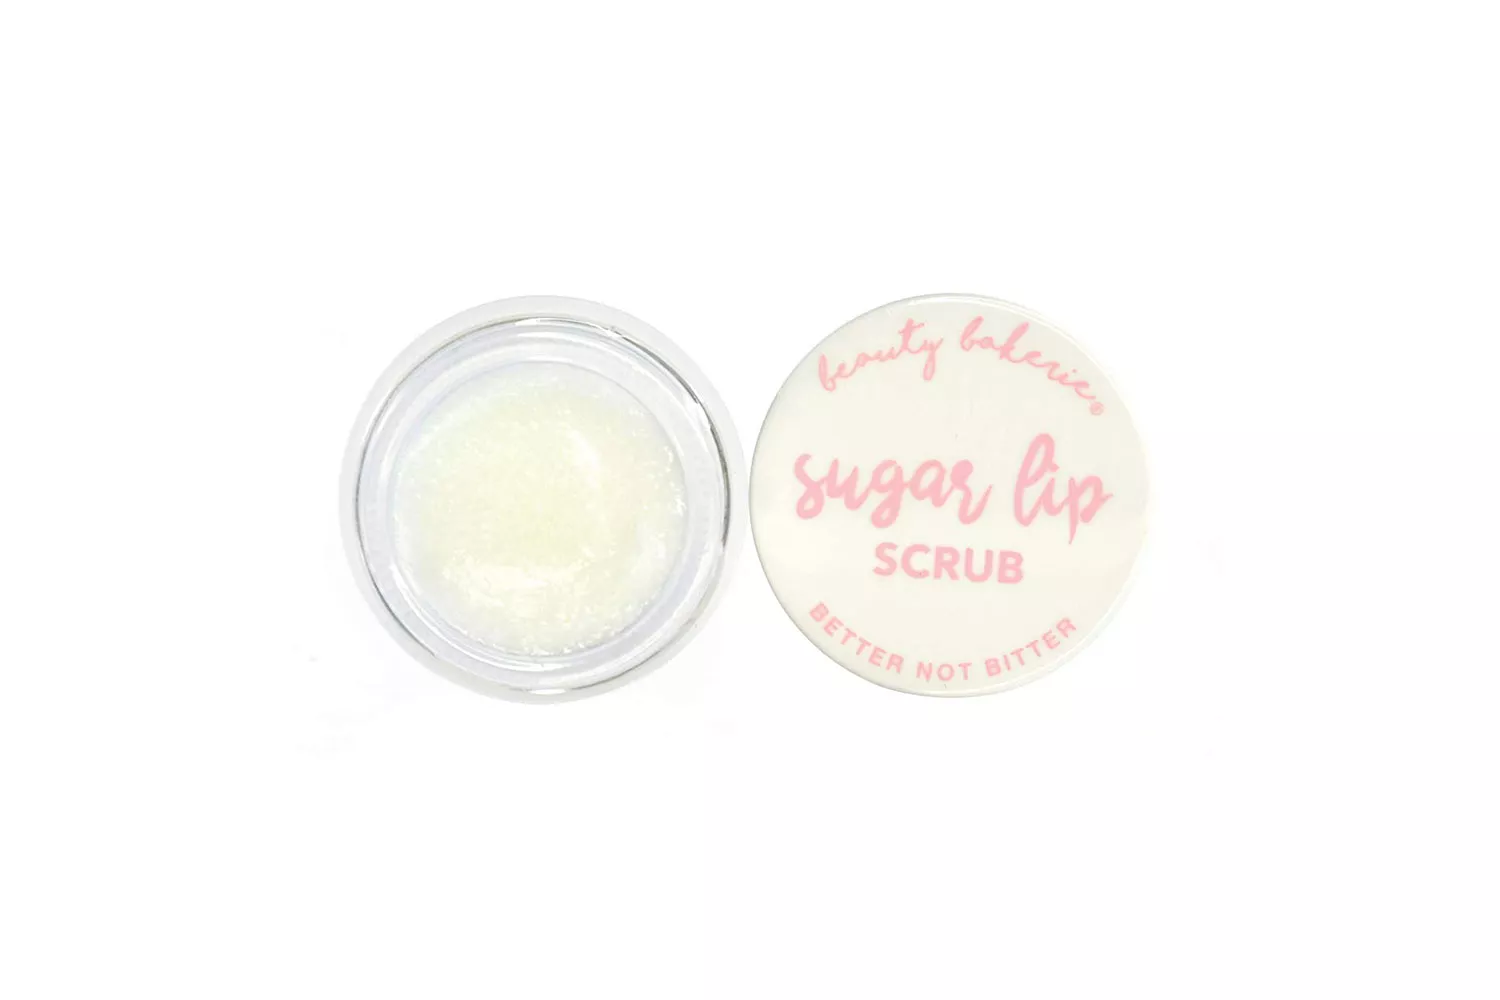 Beauty Bakerie Sugar Lip Scrub